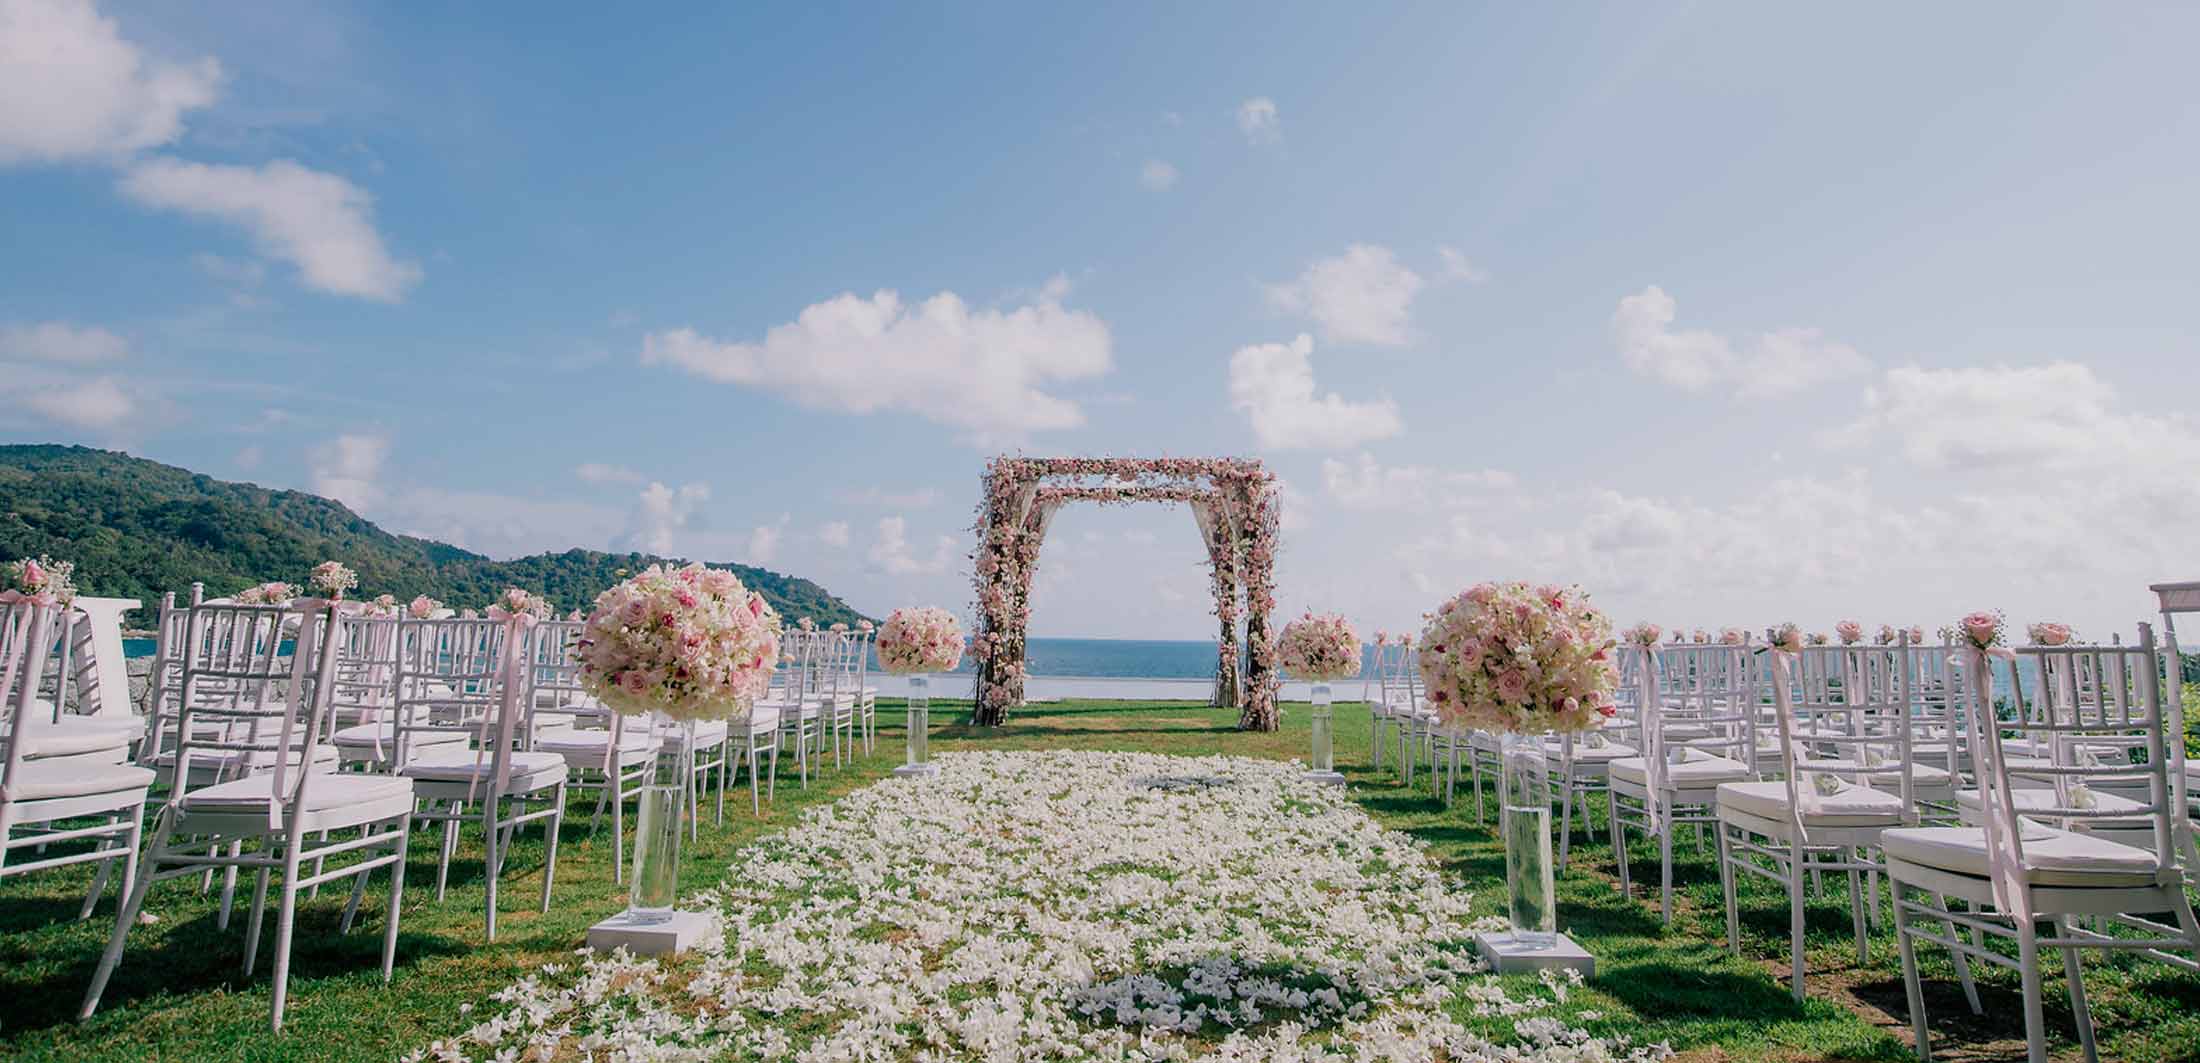 Phuket Villa Weddings, wedding planner phuket